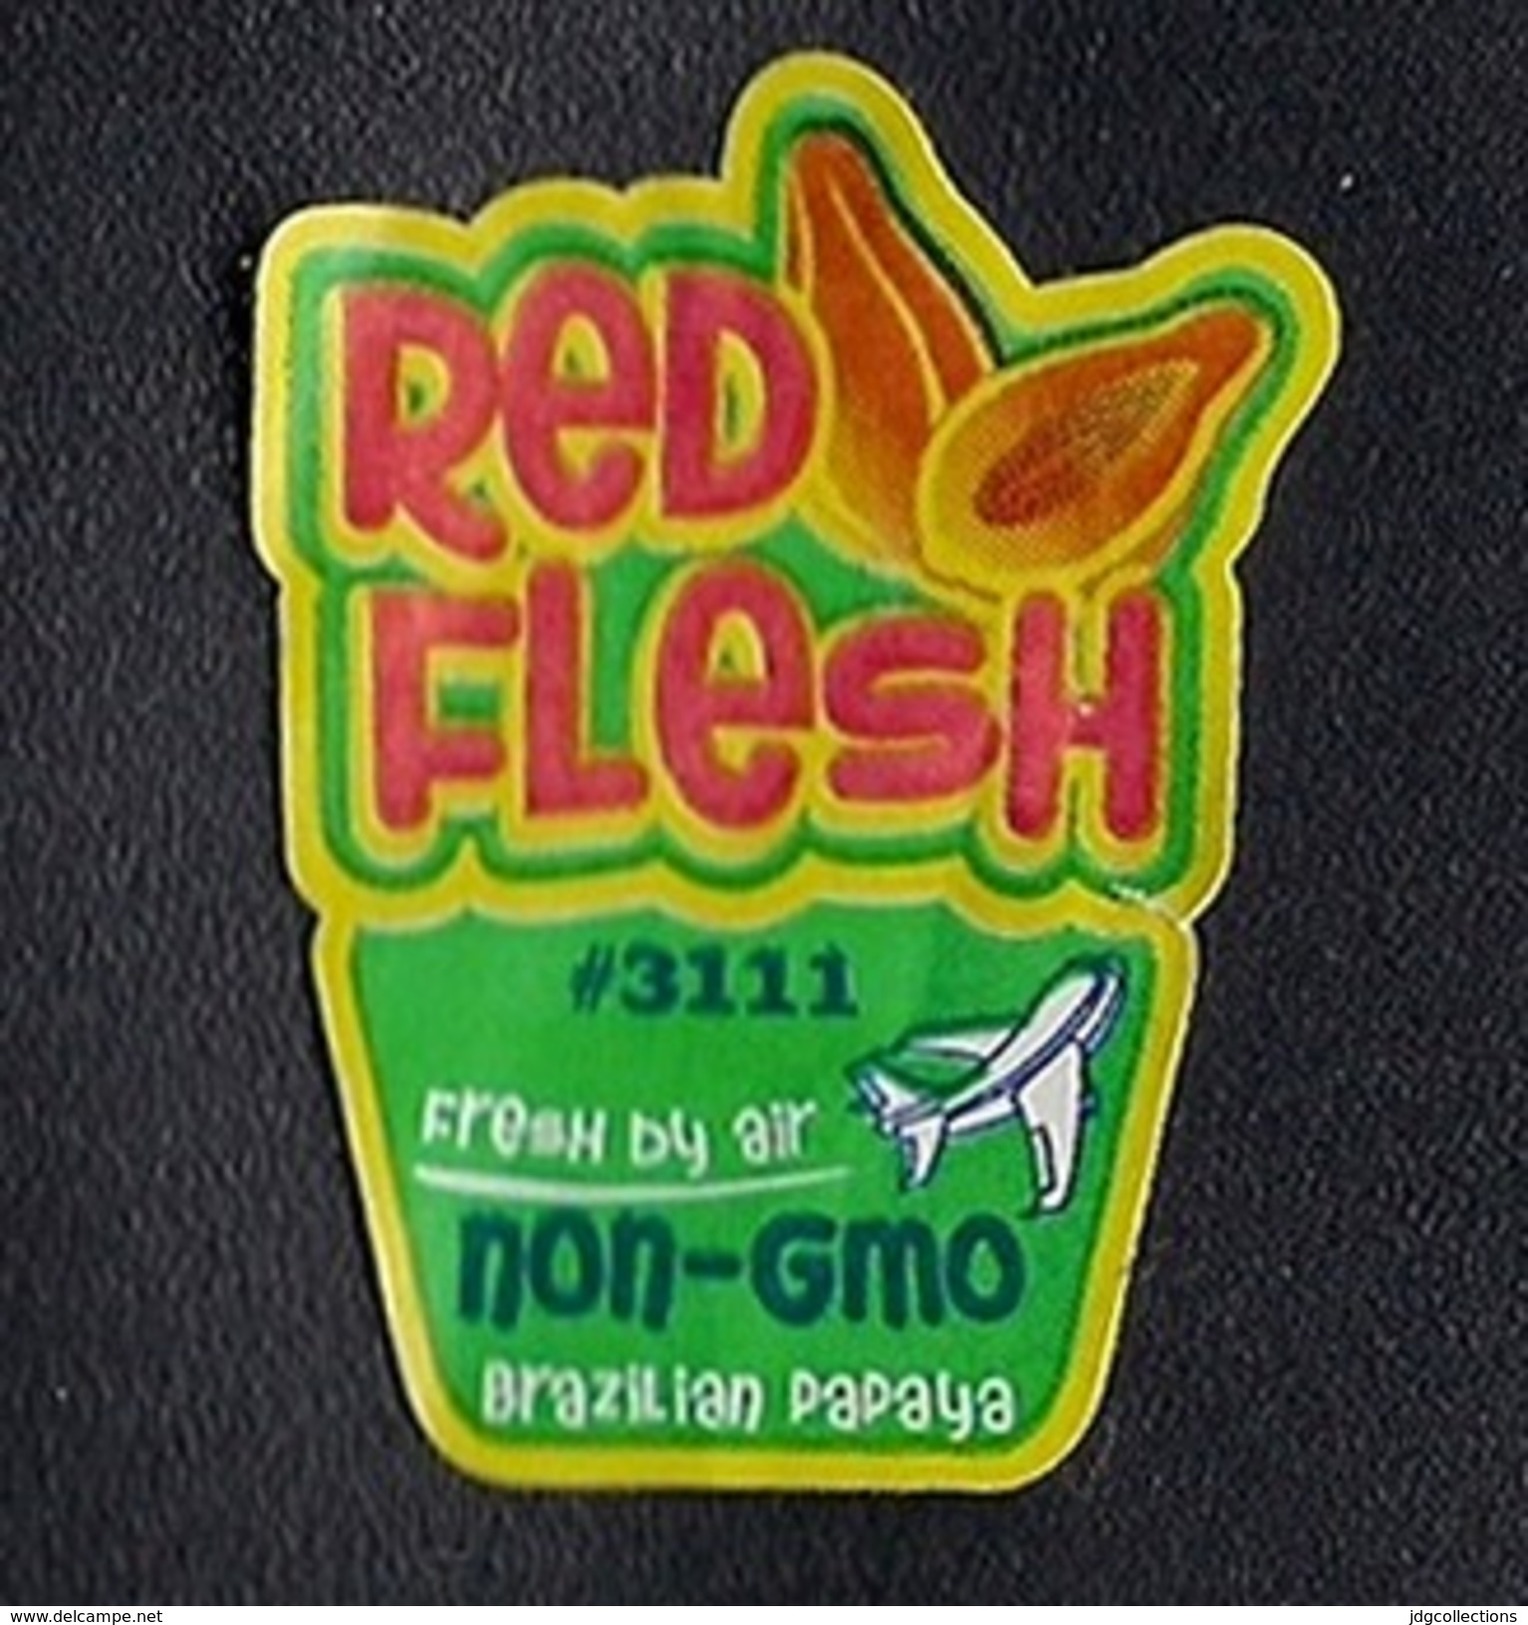 # PAPAYA RED FLESH Brazil By Air Fruit Sticker Label, Etiquettes Adhesive Aufkleber Fruta Frucht Avion Airplane Jet - Fruits & Vegetables